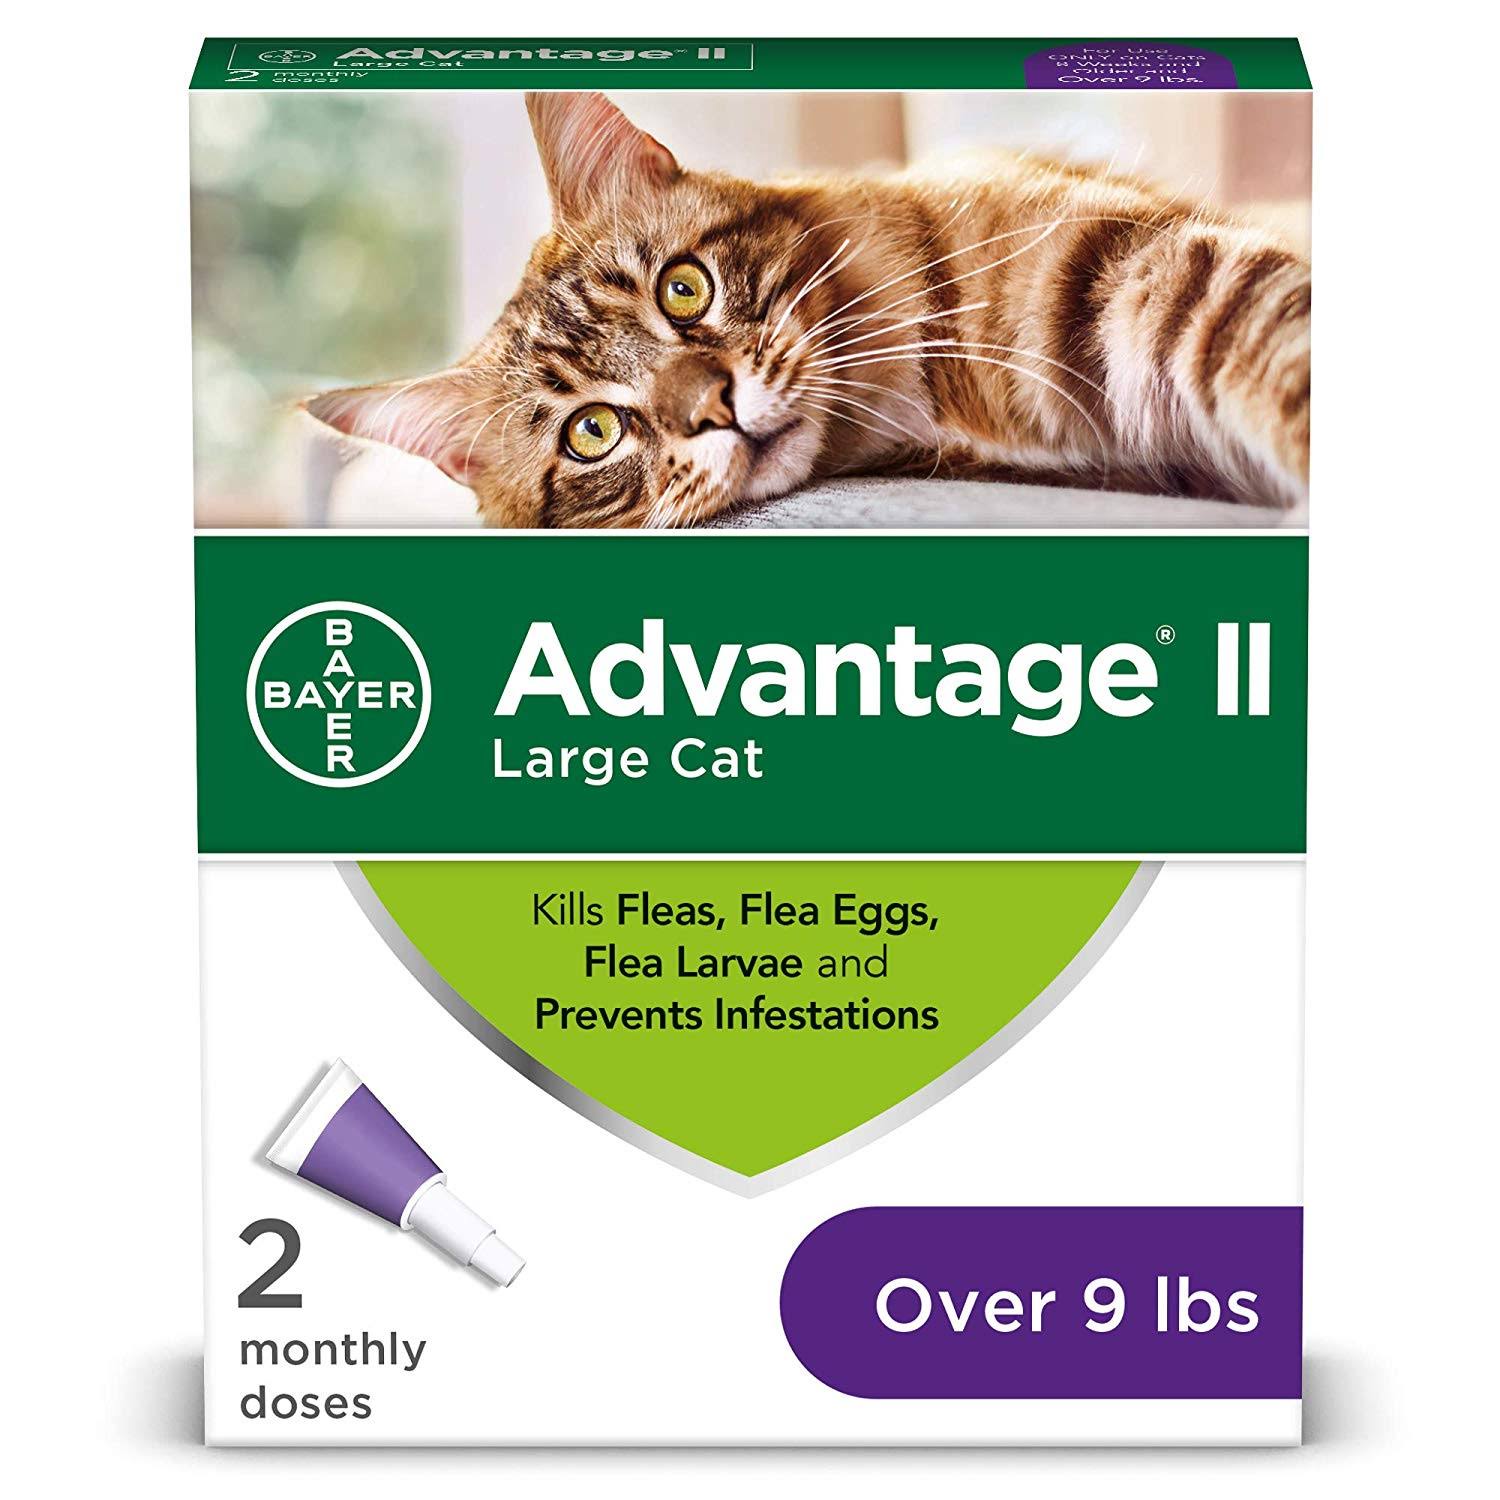 Advantage II Flea Control for Cats - Large Cat over 9lbs